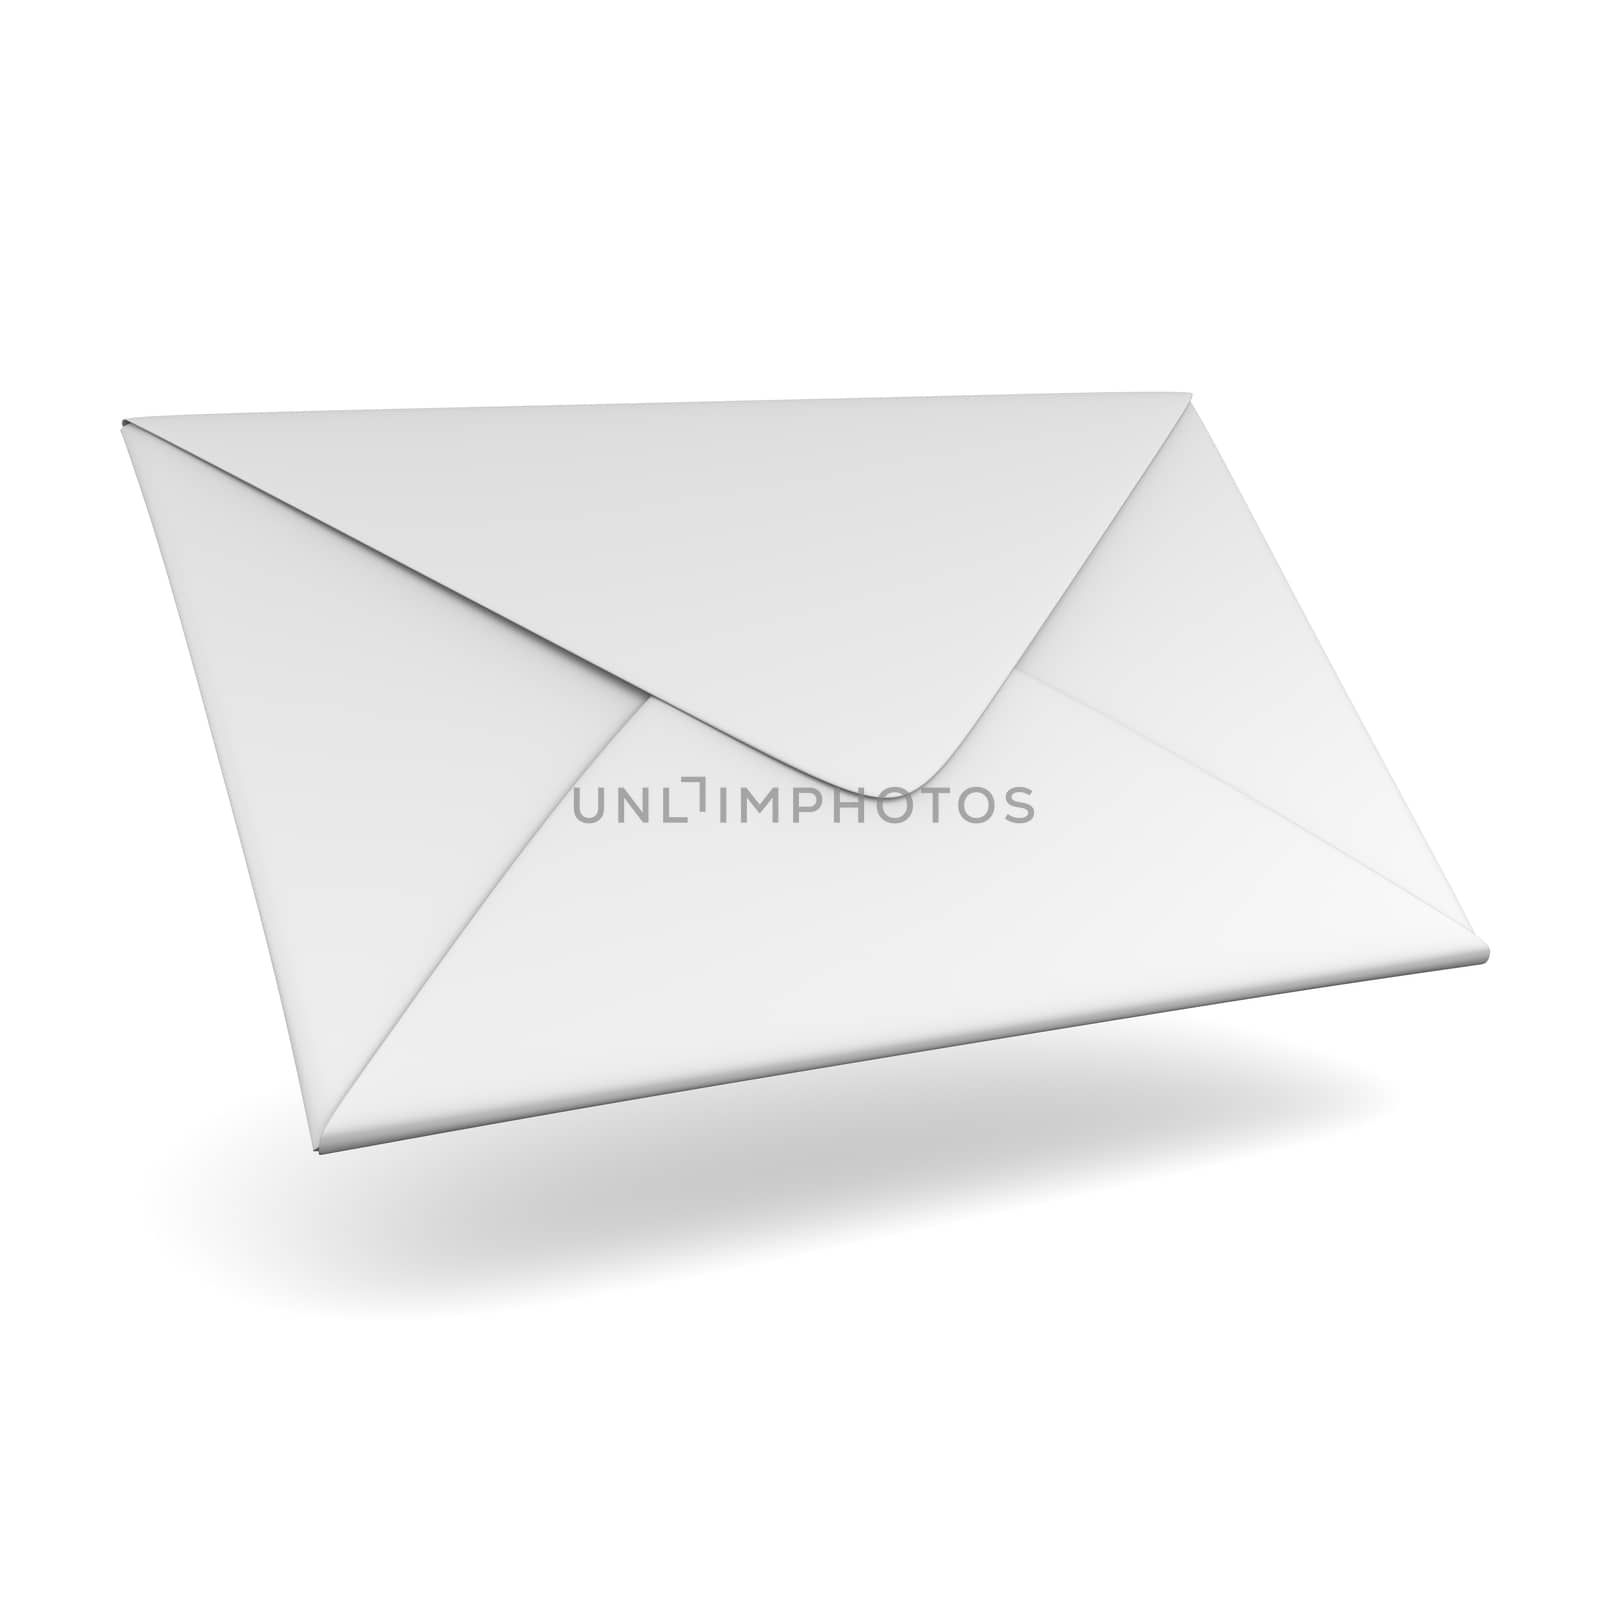 Single Mail Envelope Illustration on White Background